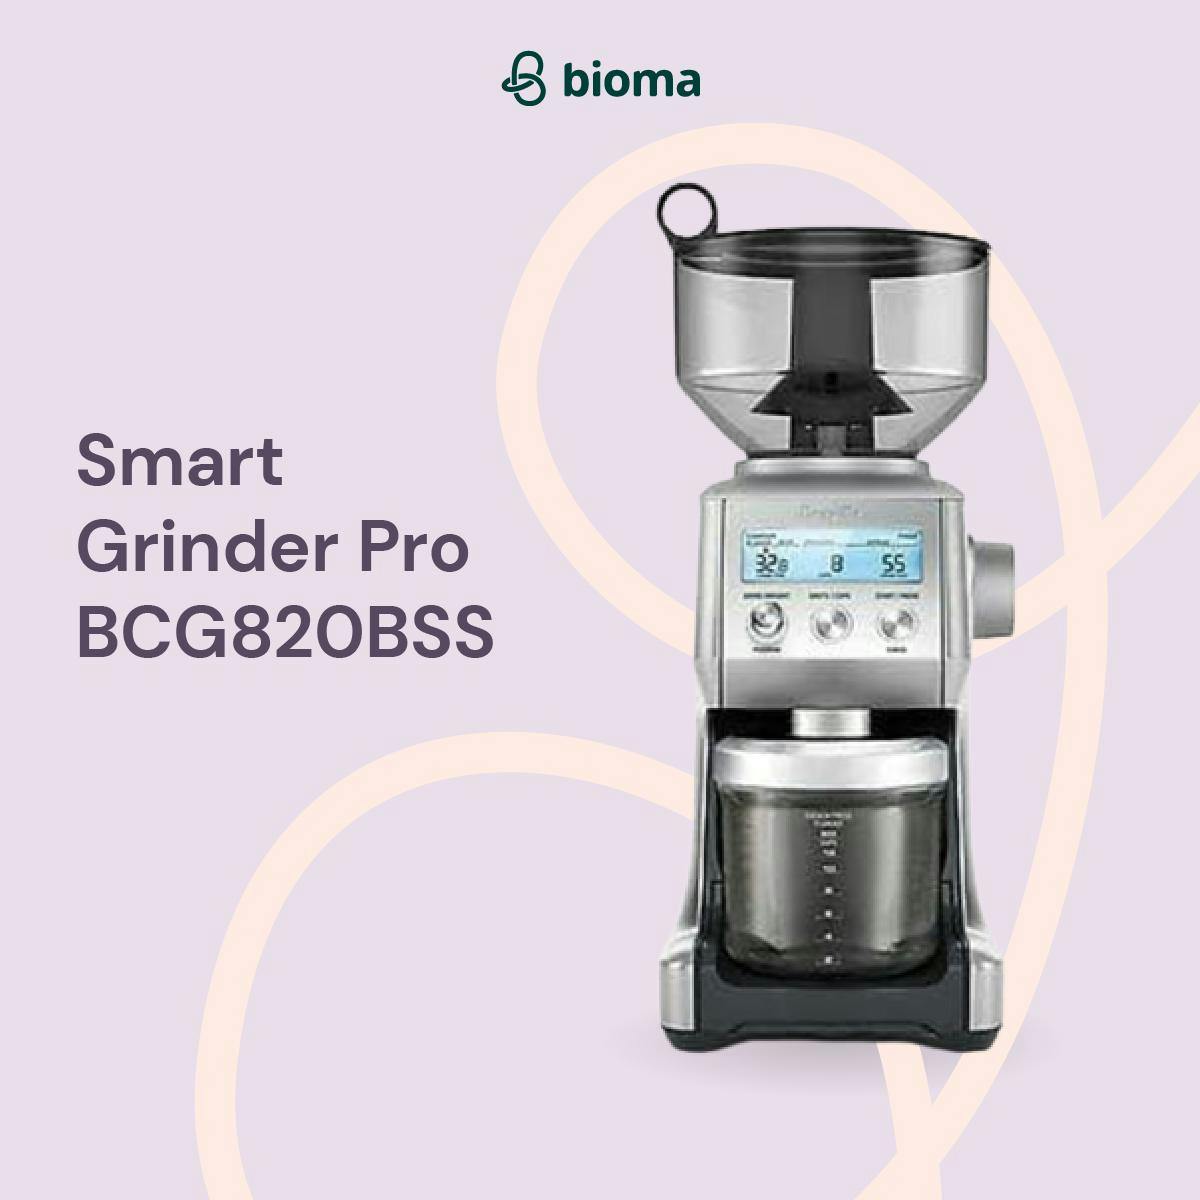 Smart Grinder Pro - BCG820BSS